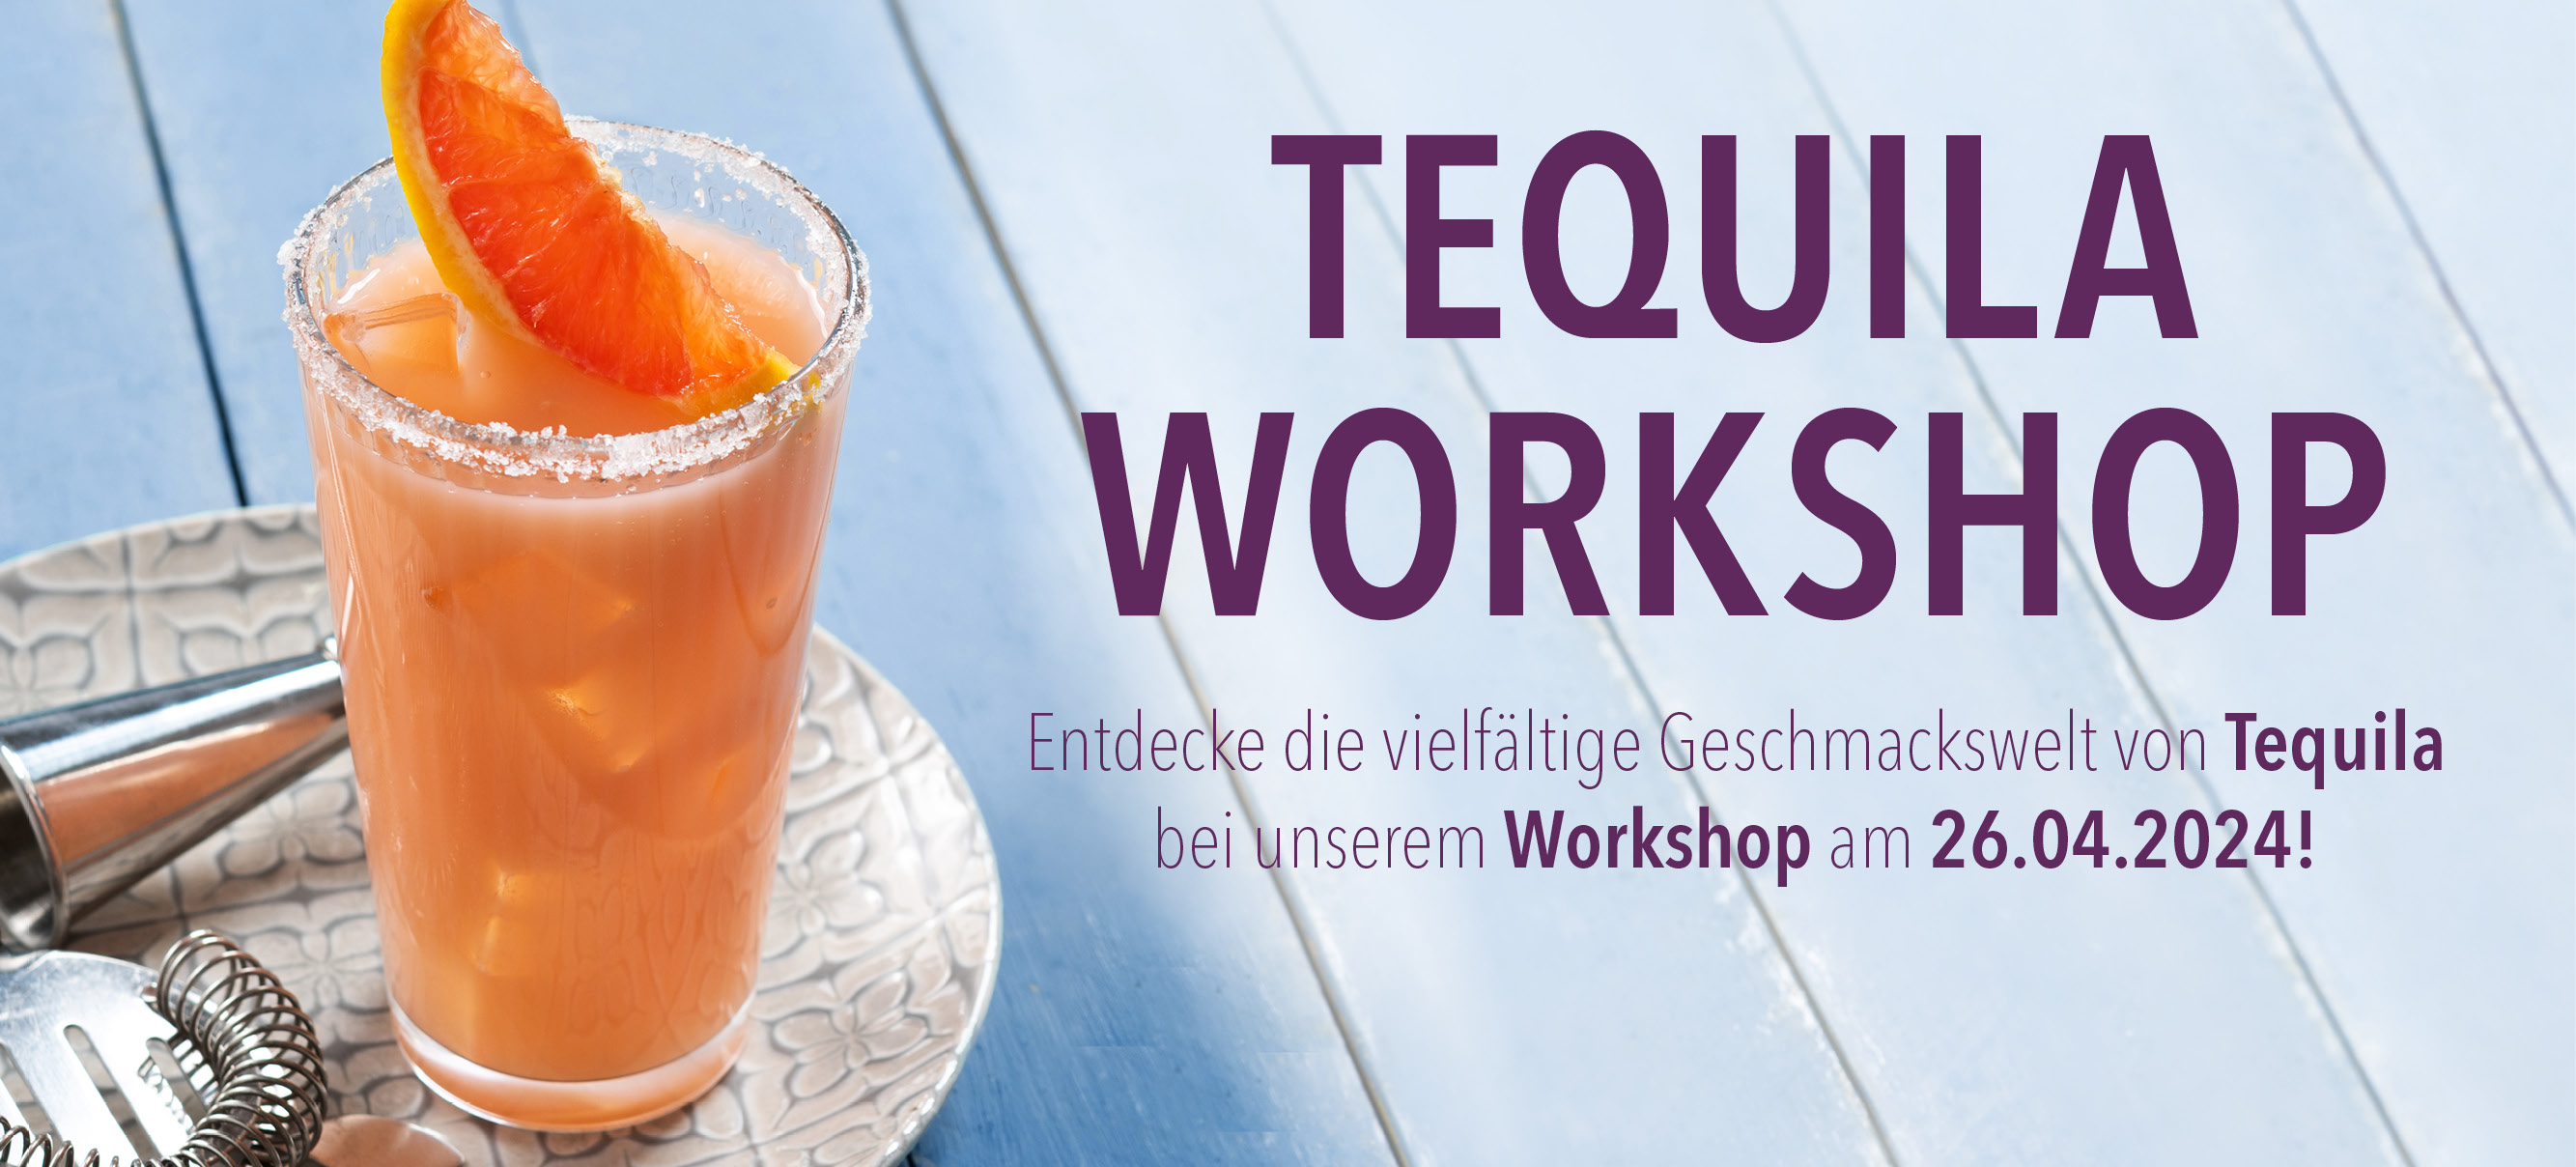 Tequila Workshop Bremen